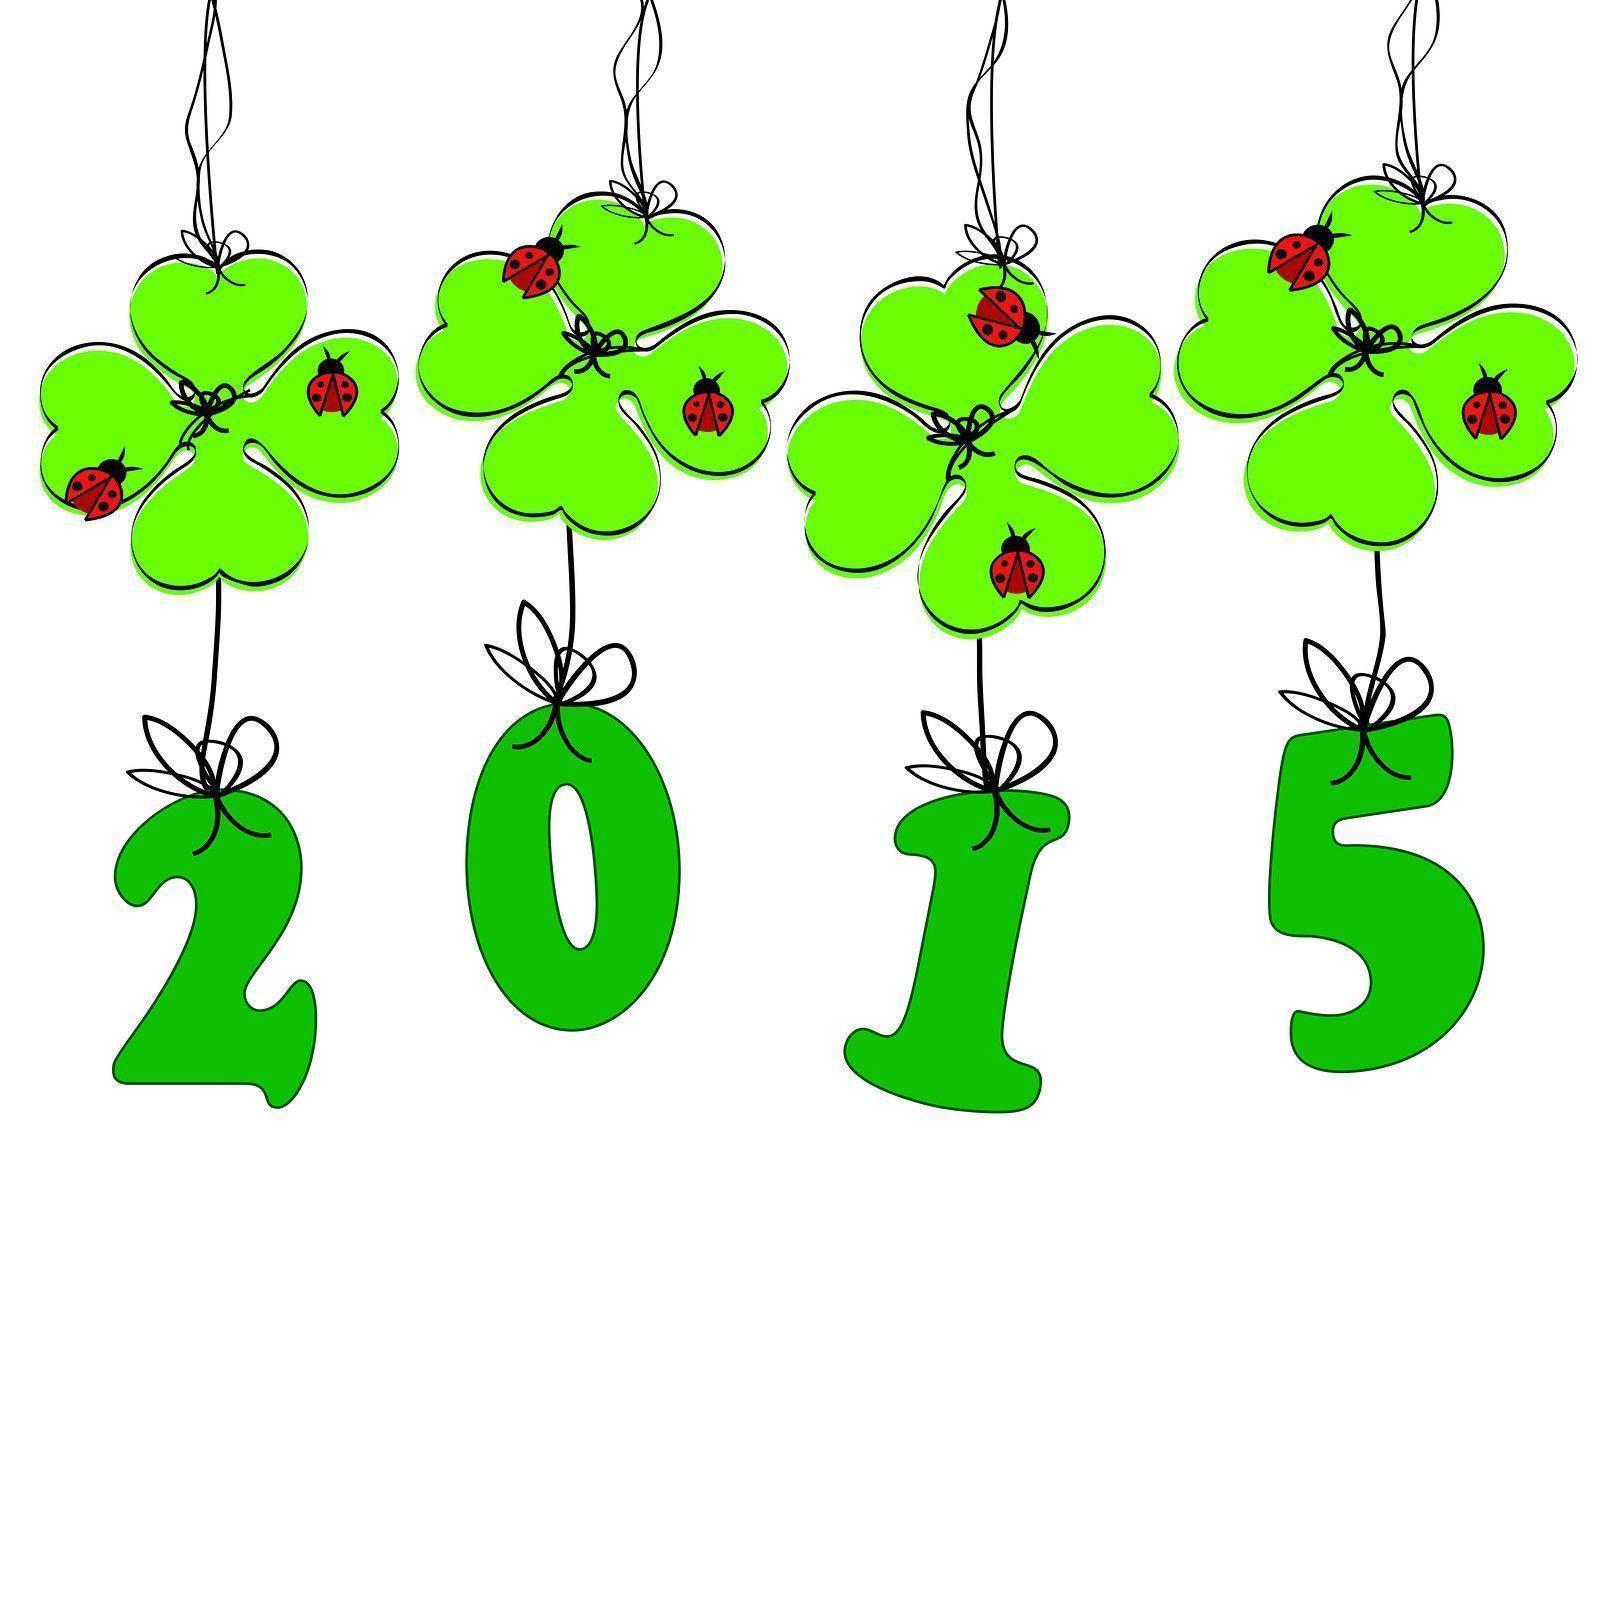 New Year Wallpaper 2015. Happy New Year